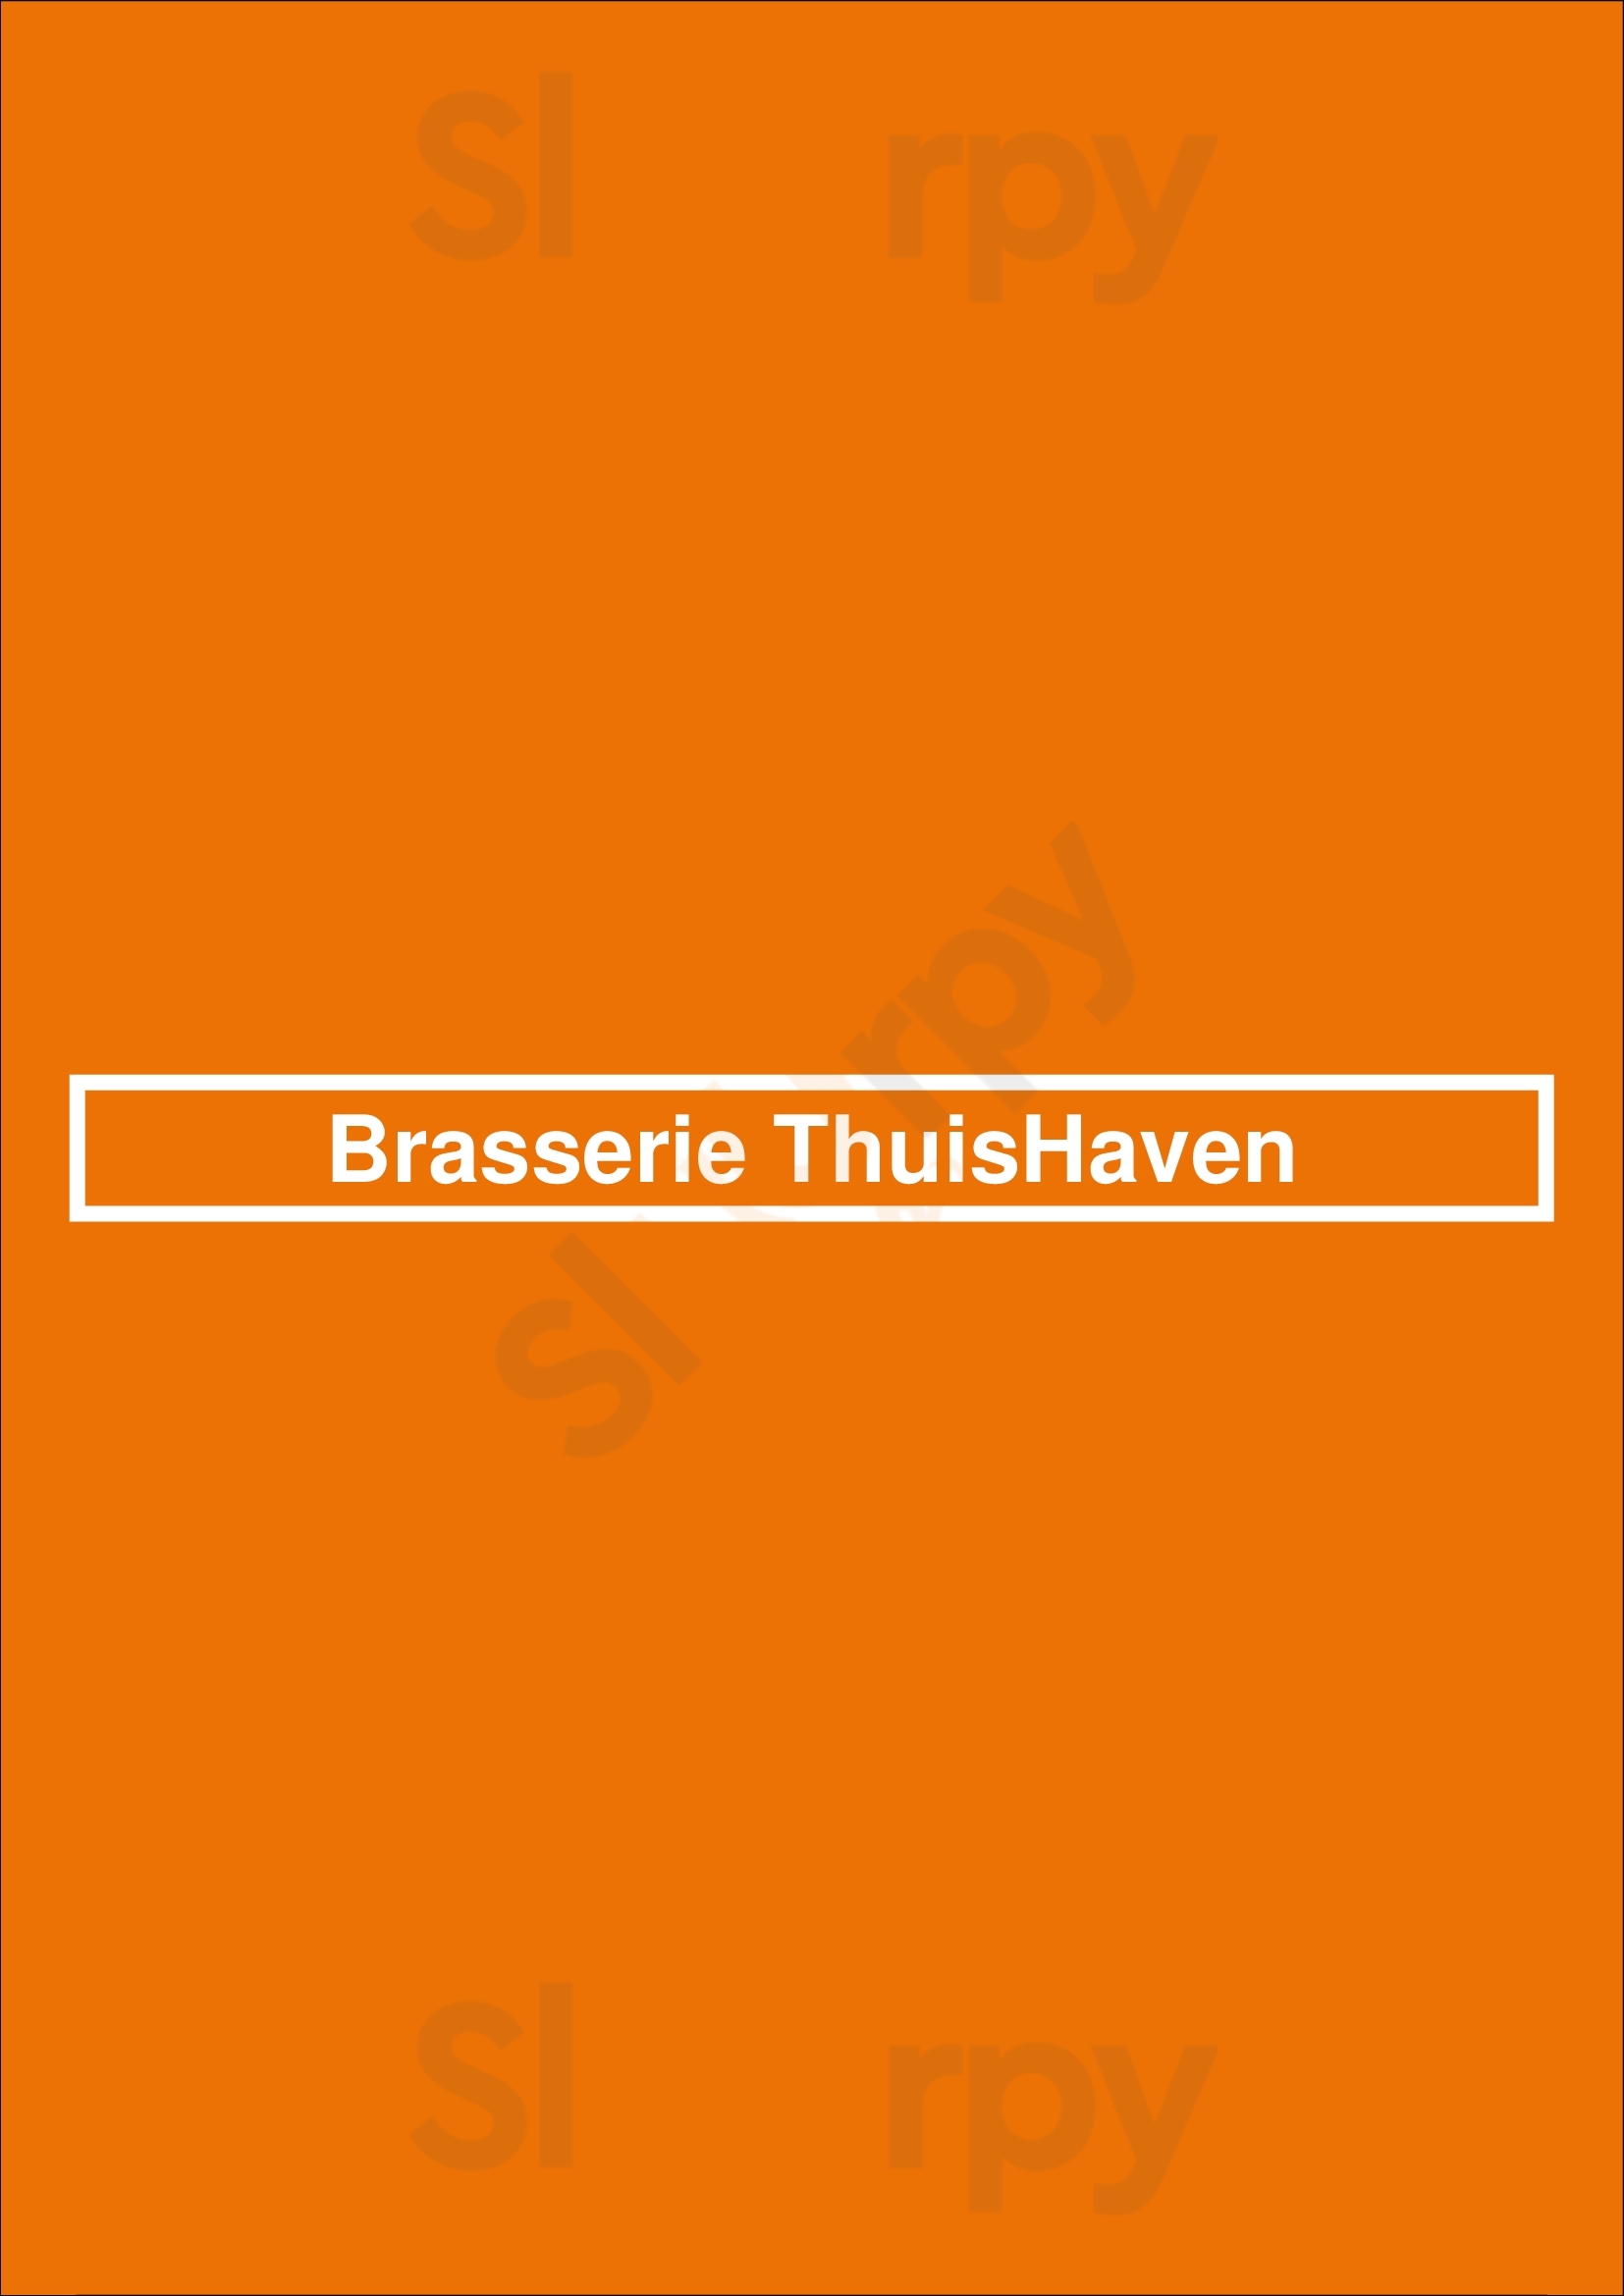 Brasserie Thuishaven Almere Menu - 1